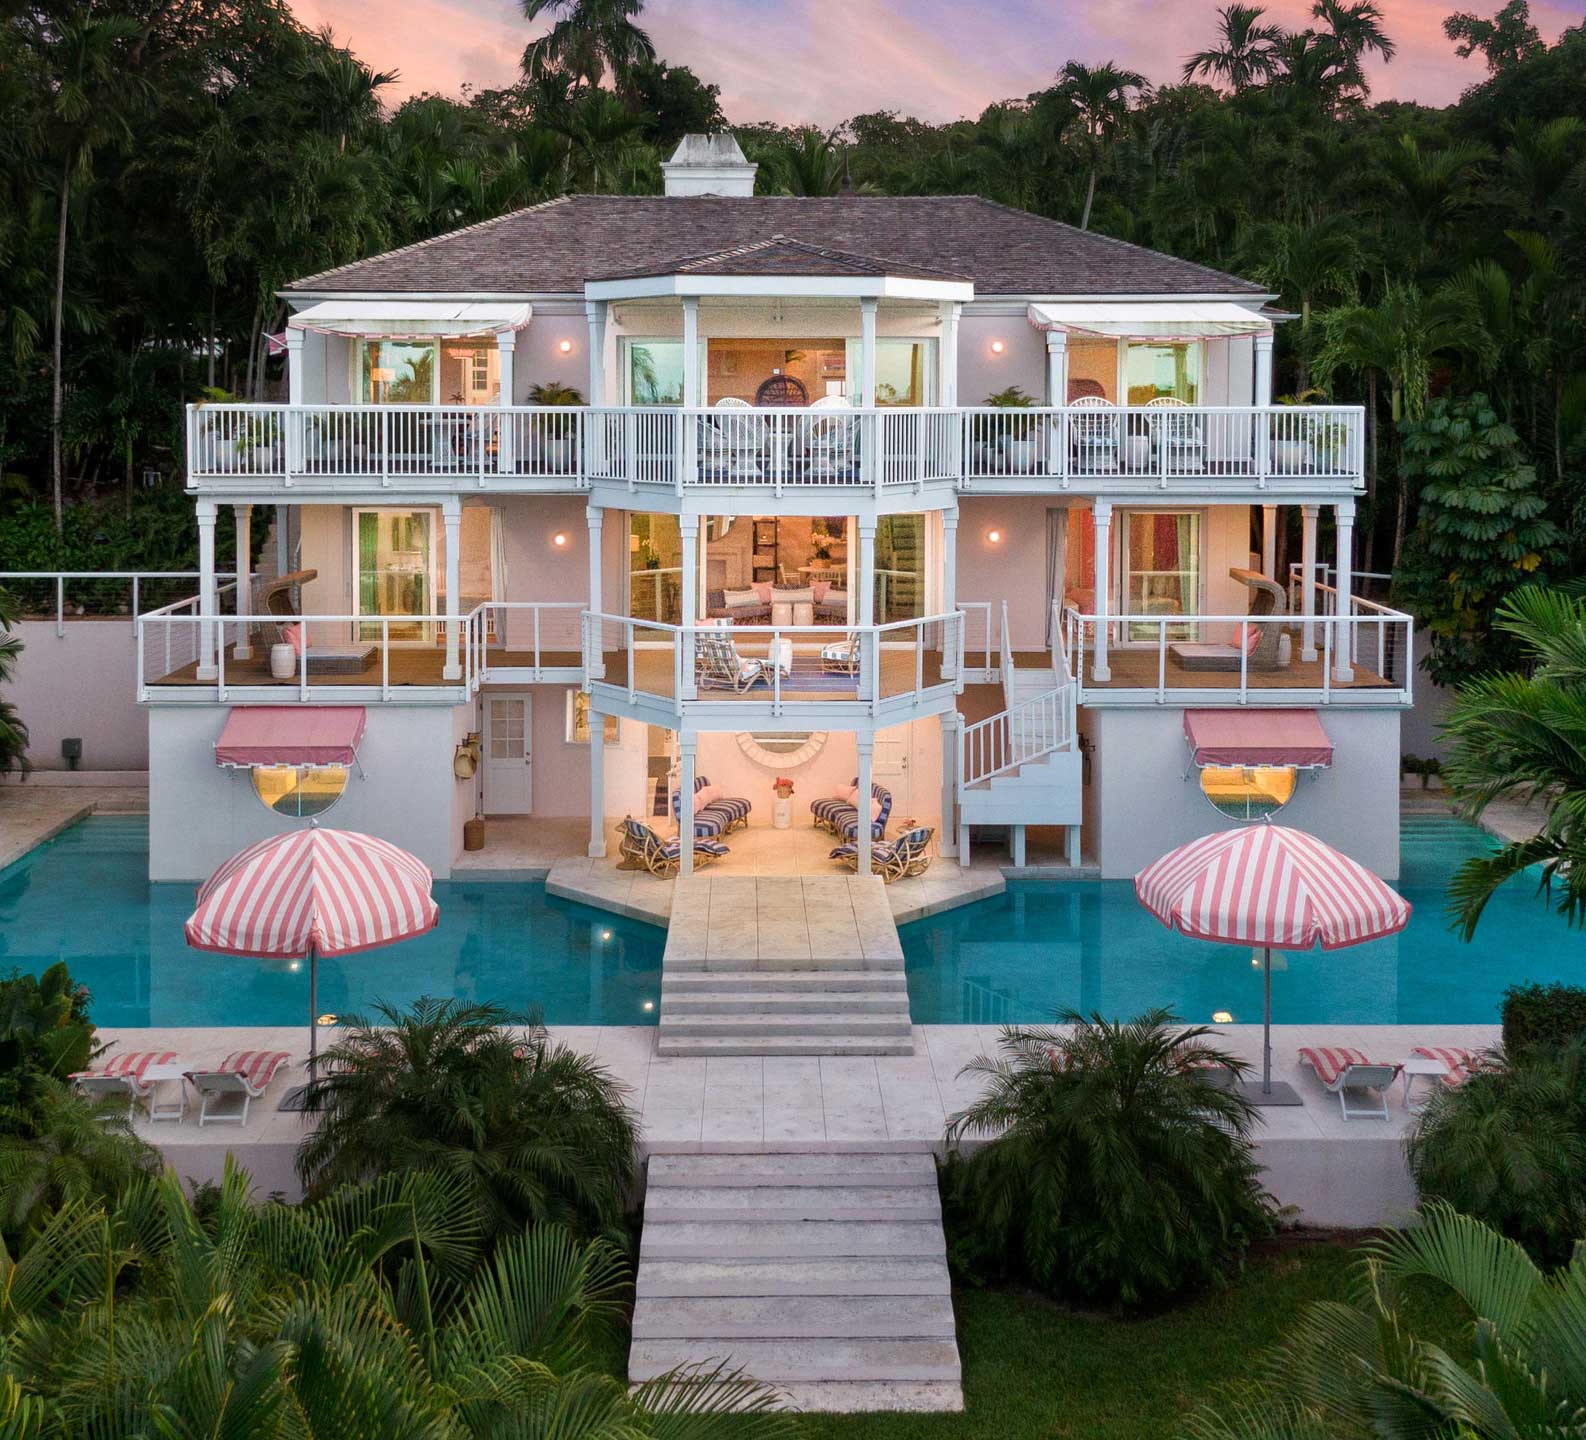 Image exterior of Bahamas home